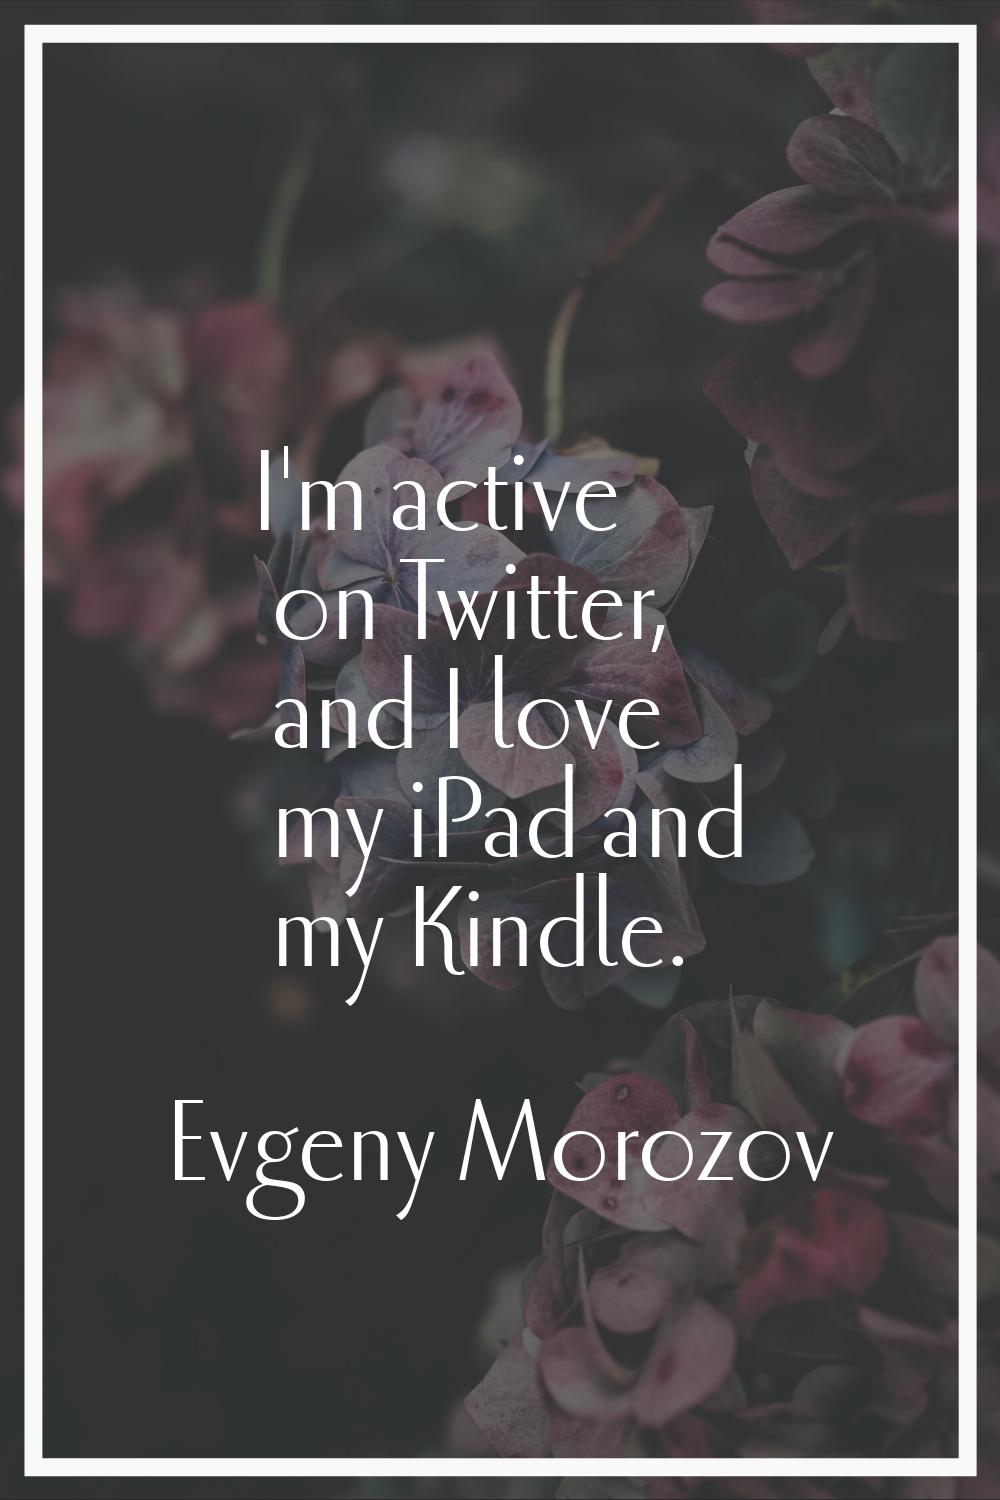 I'm active on Twitter, and I love my iPad and my Kindle.